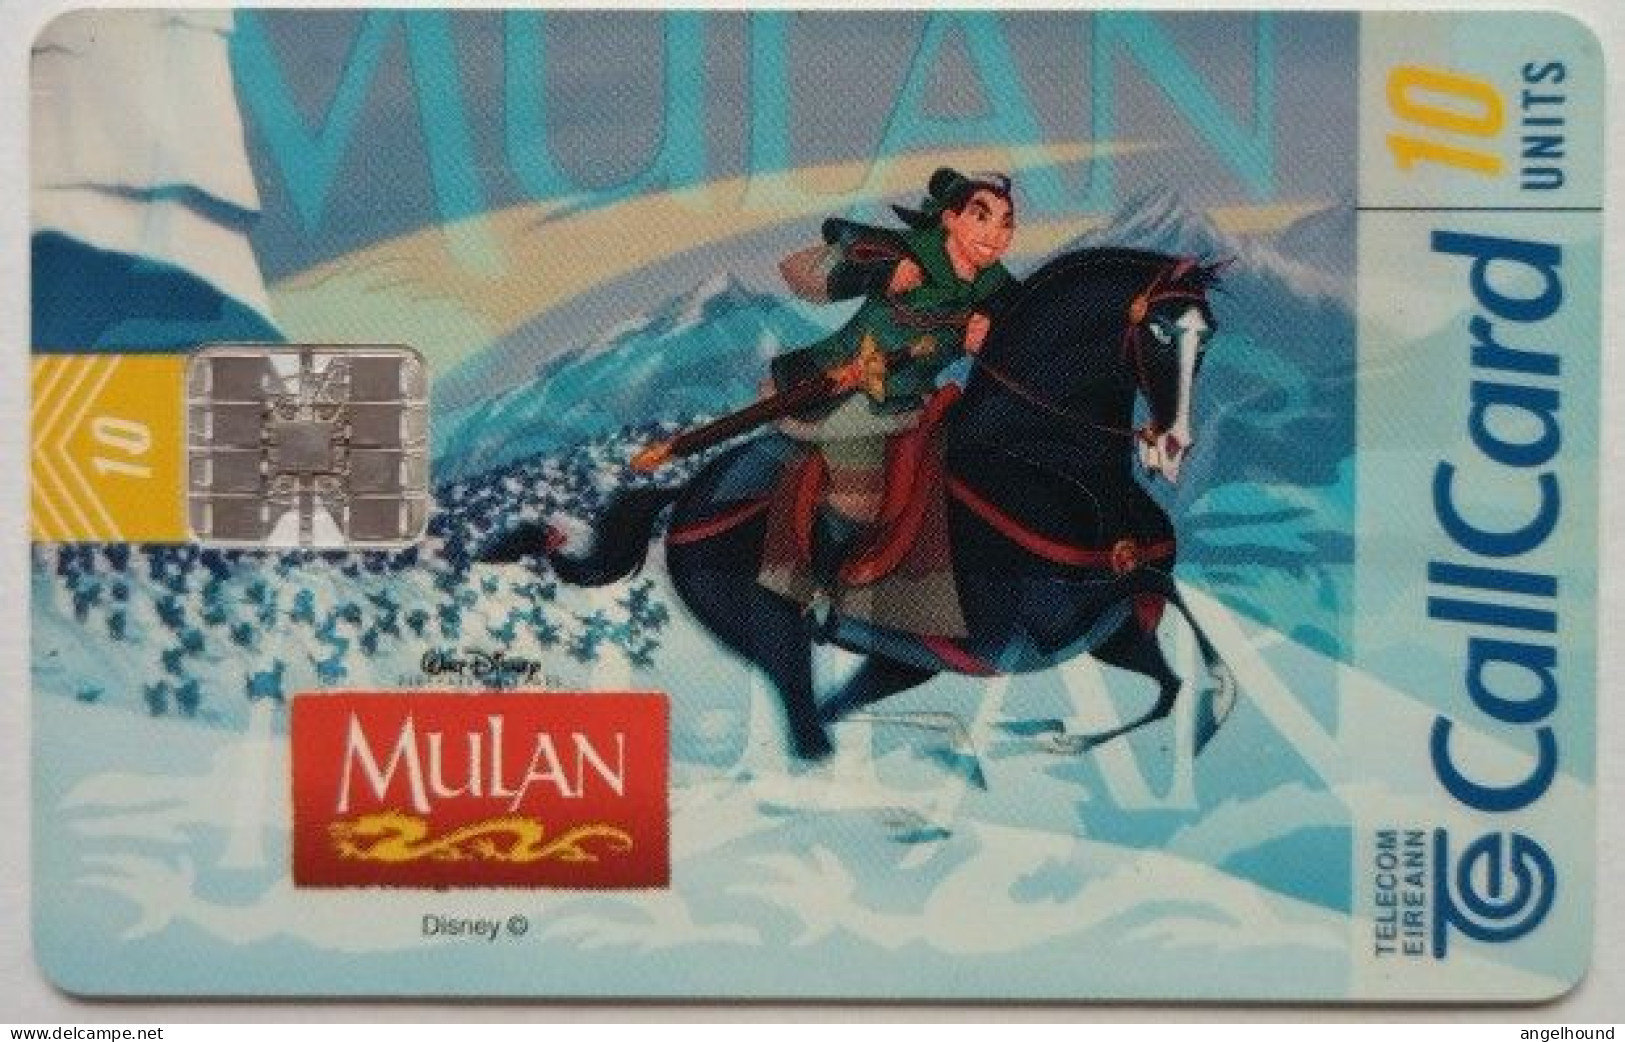 Ireland 10 Units Chip Card - Mulan - Irland